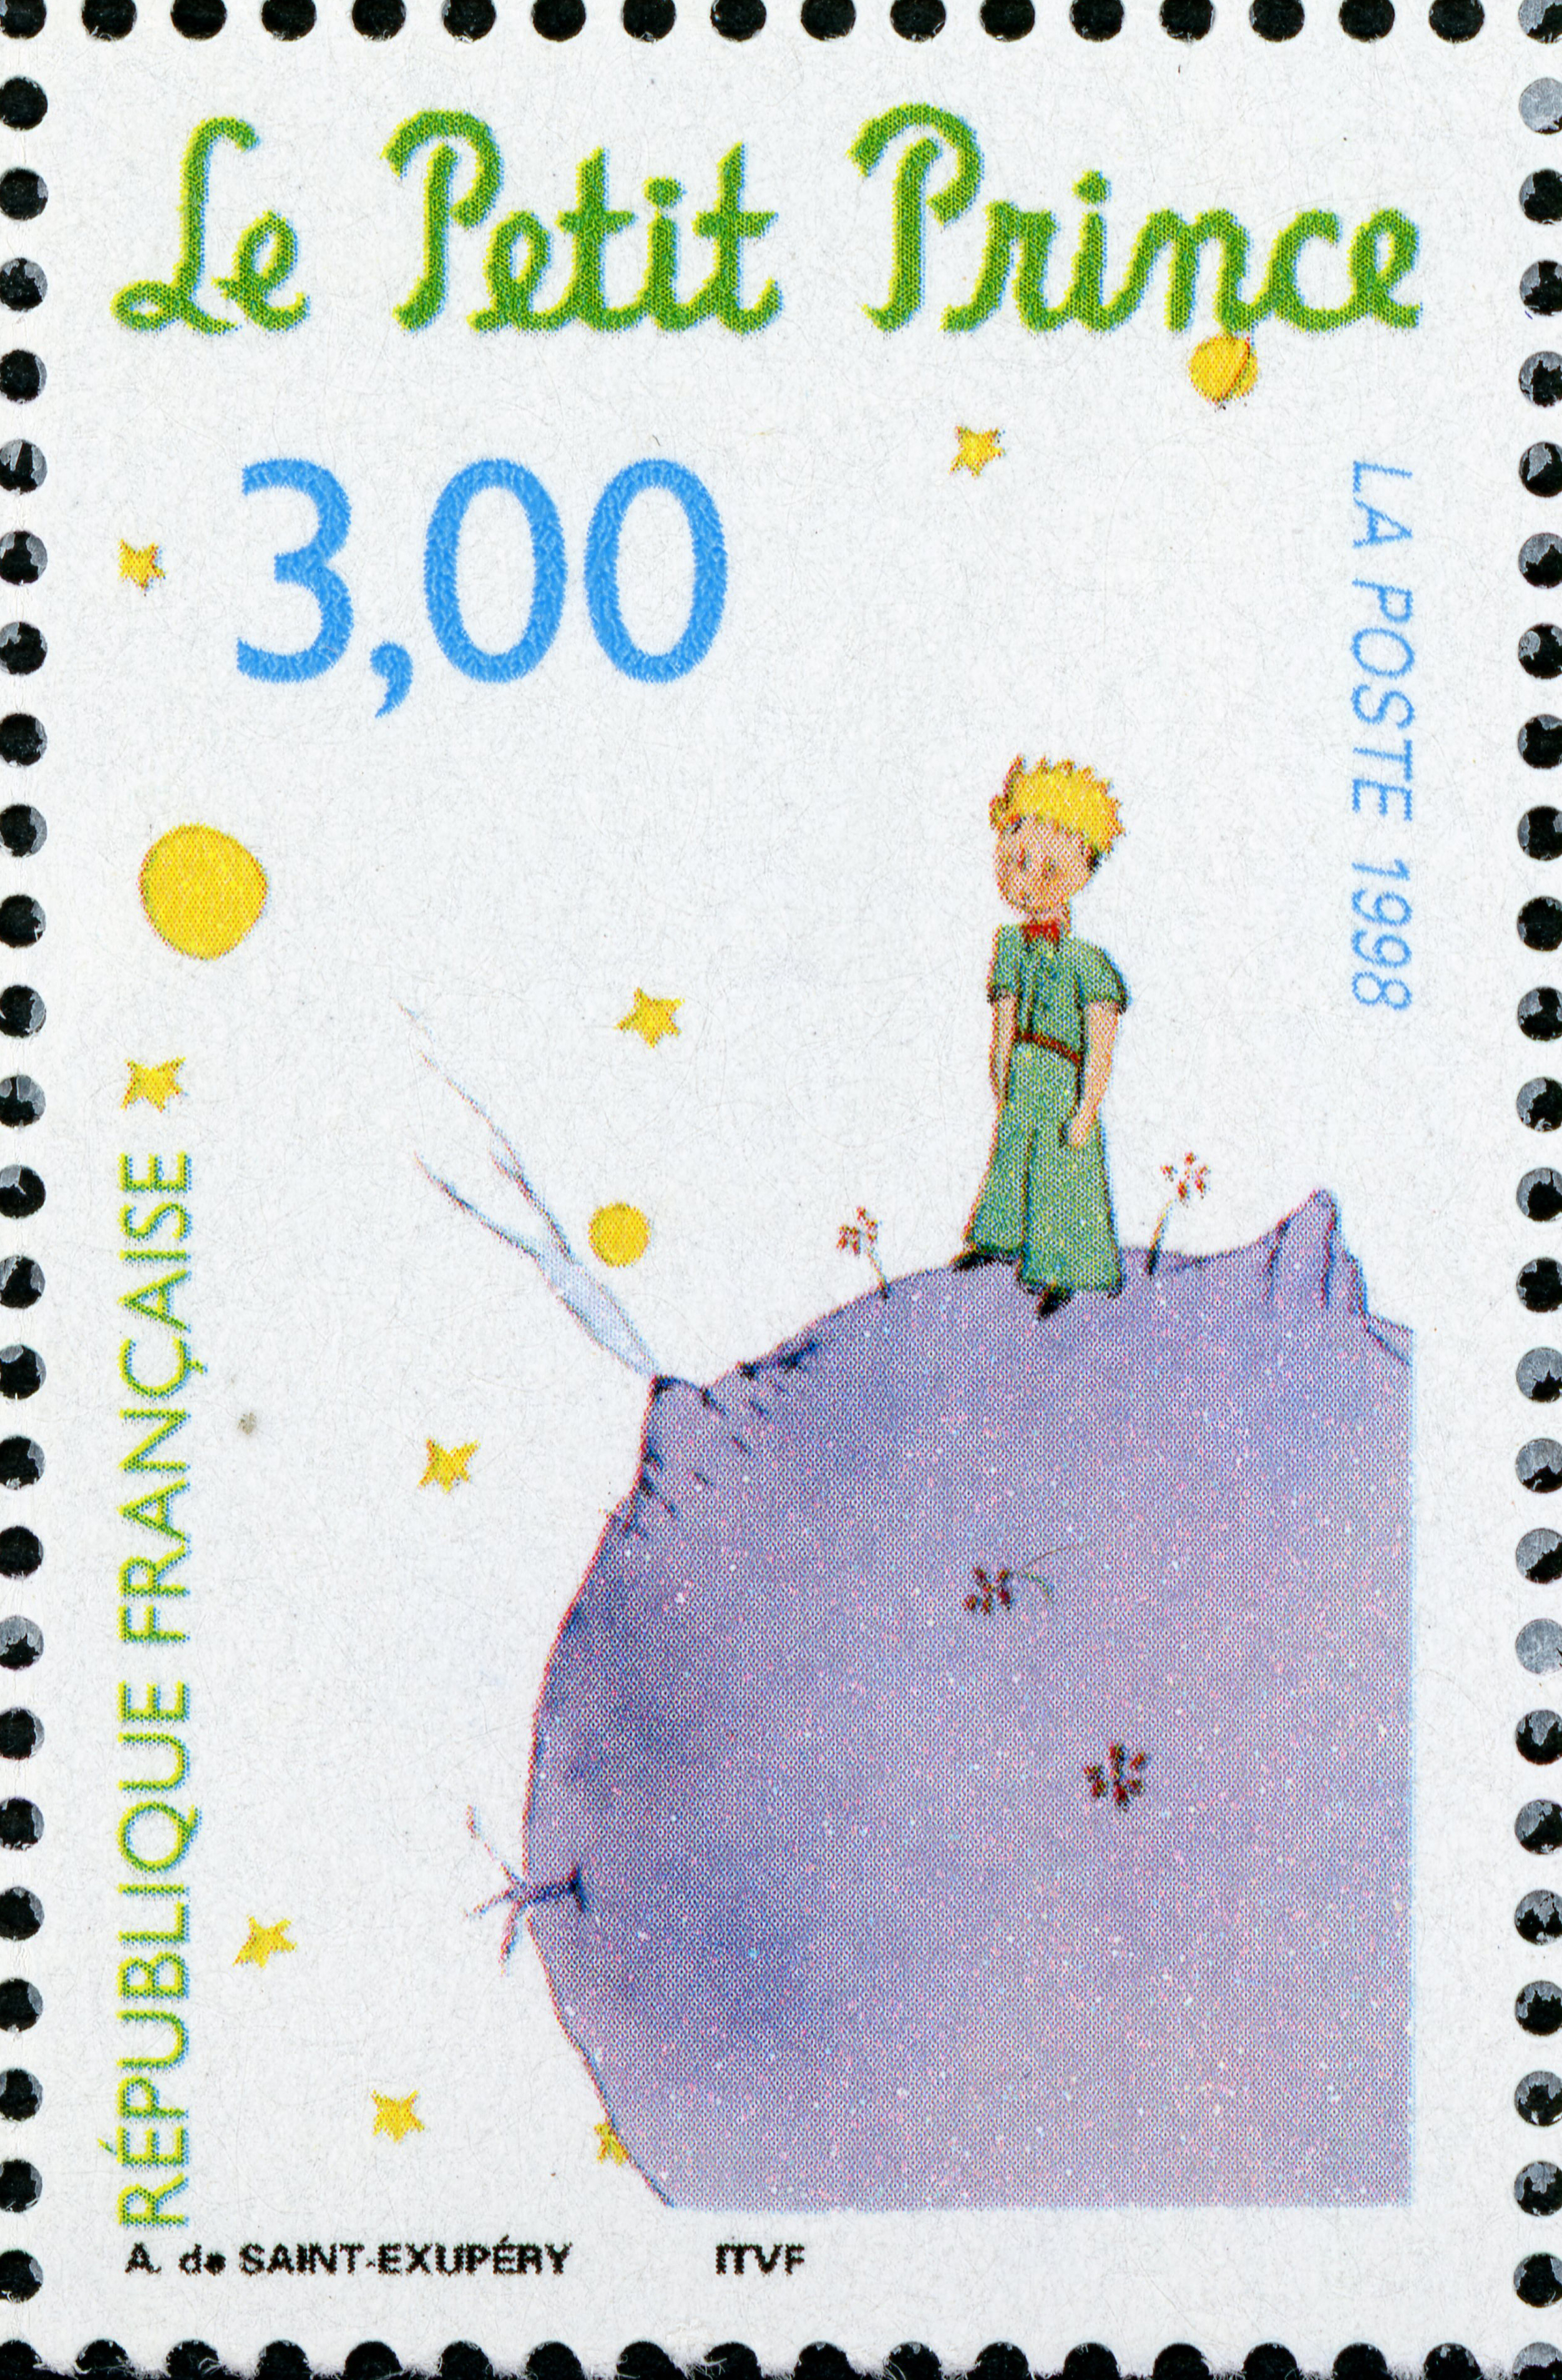 Little Prince France 1998 (planet)